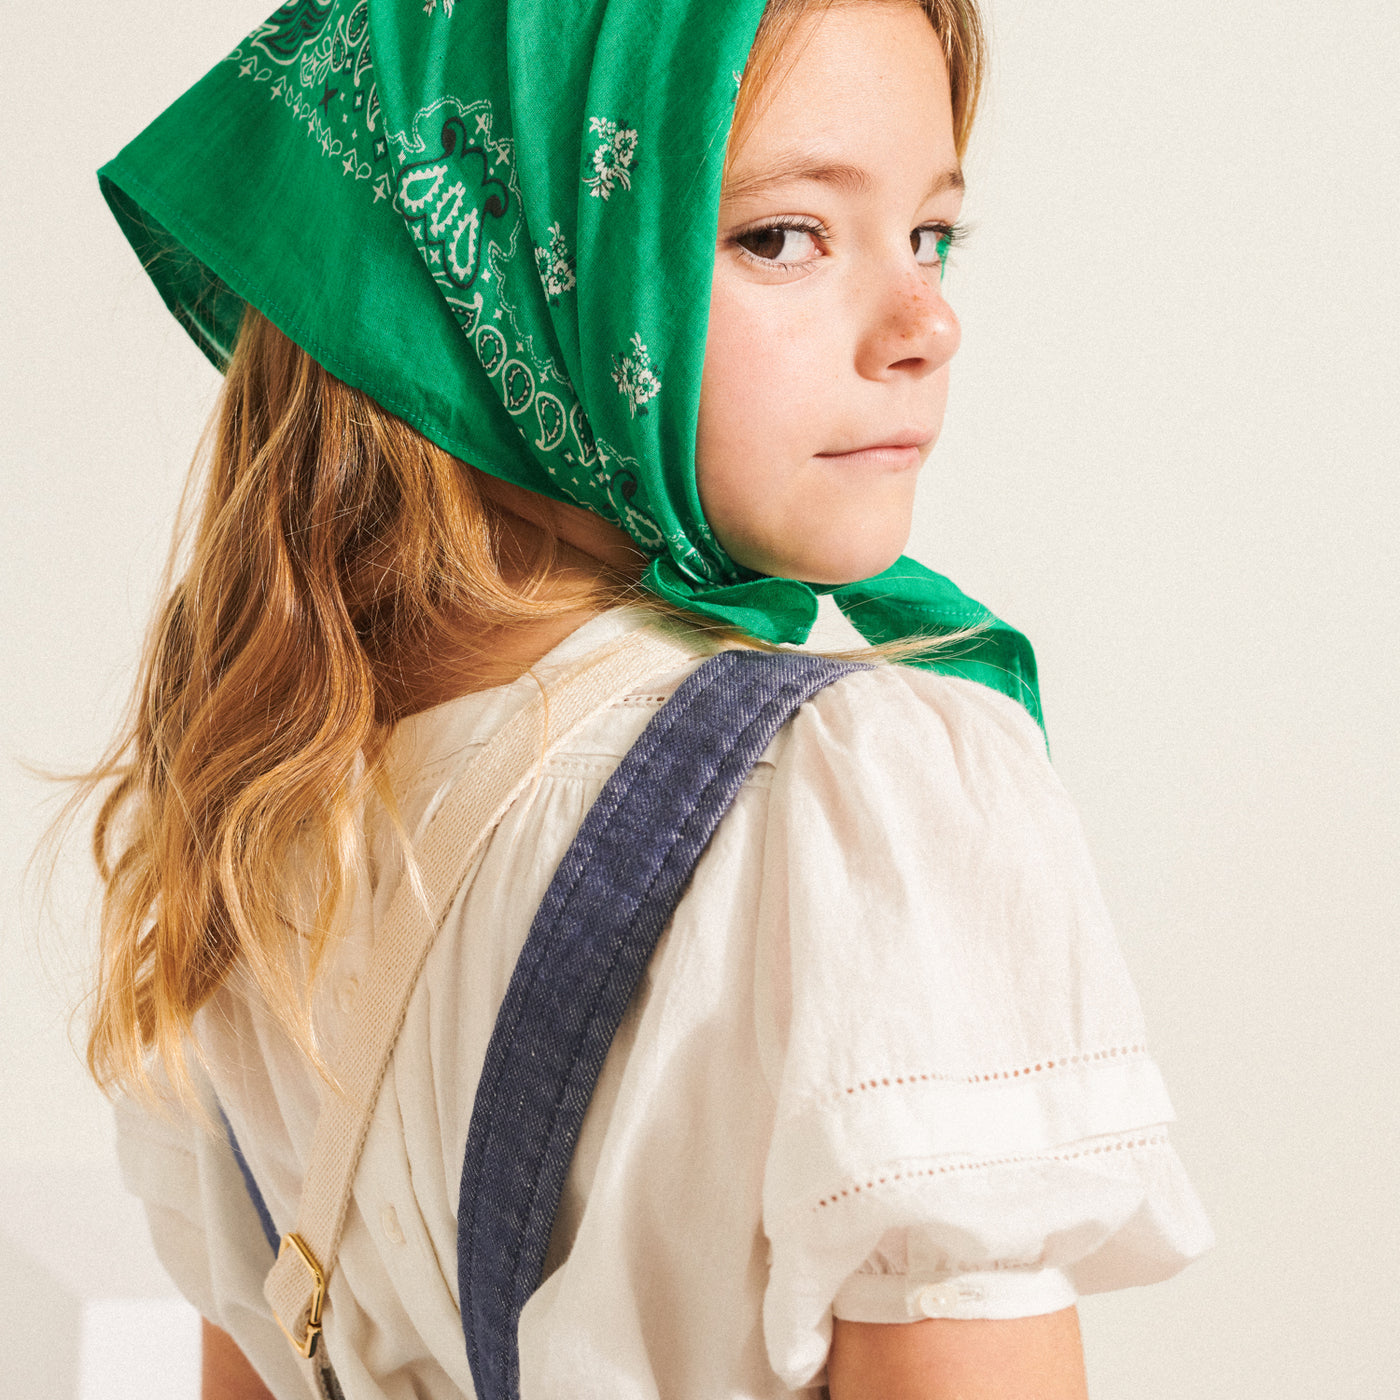 Bonpoint girl in green bandana and cream shirt